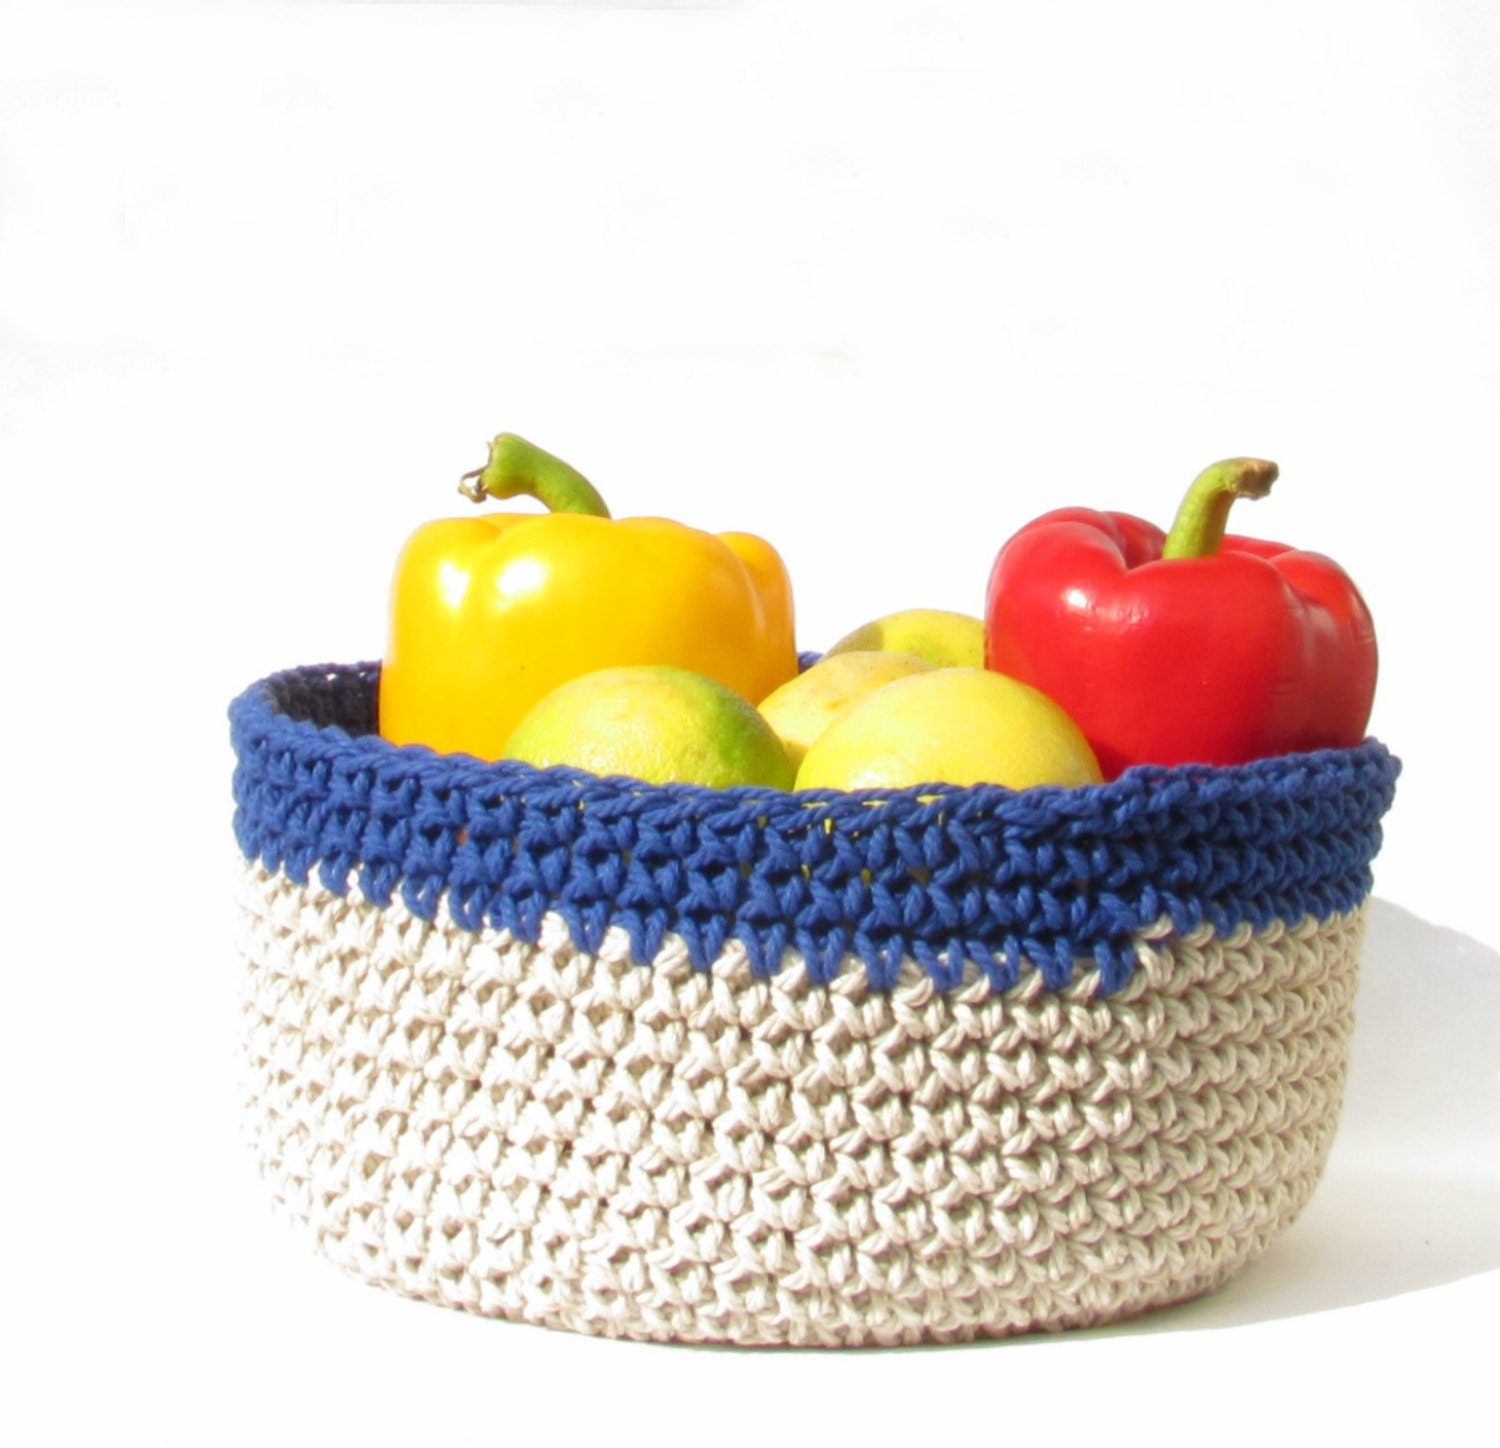 Cream and blue fruit bowl / kitchen basket / summer home decor / housewarming gift - theYarnKitchen